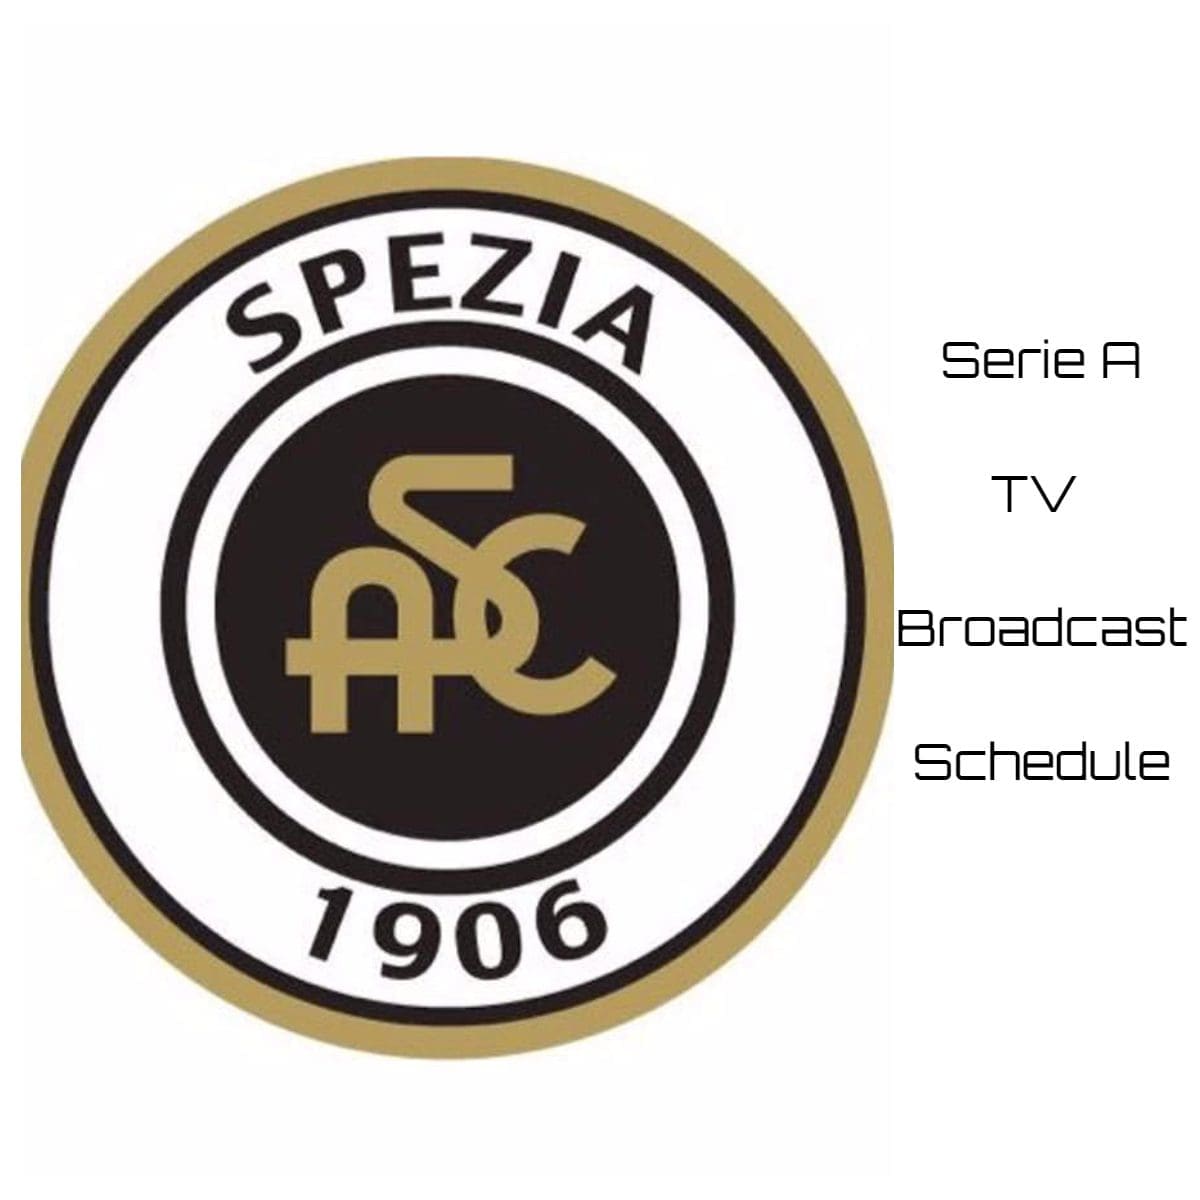 Spezia TV Broadcast Schedule